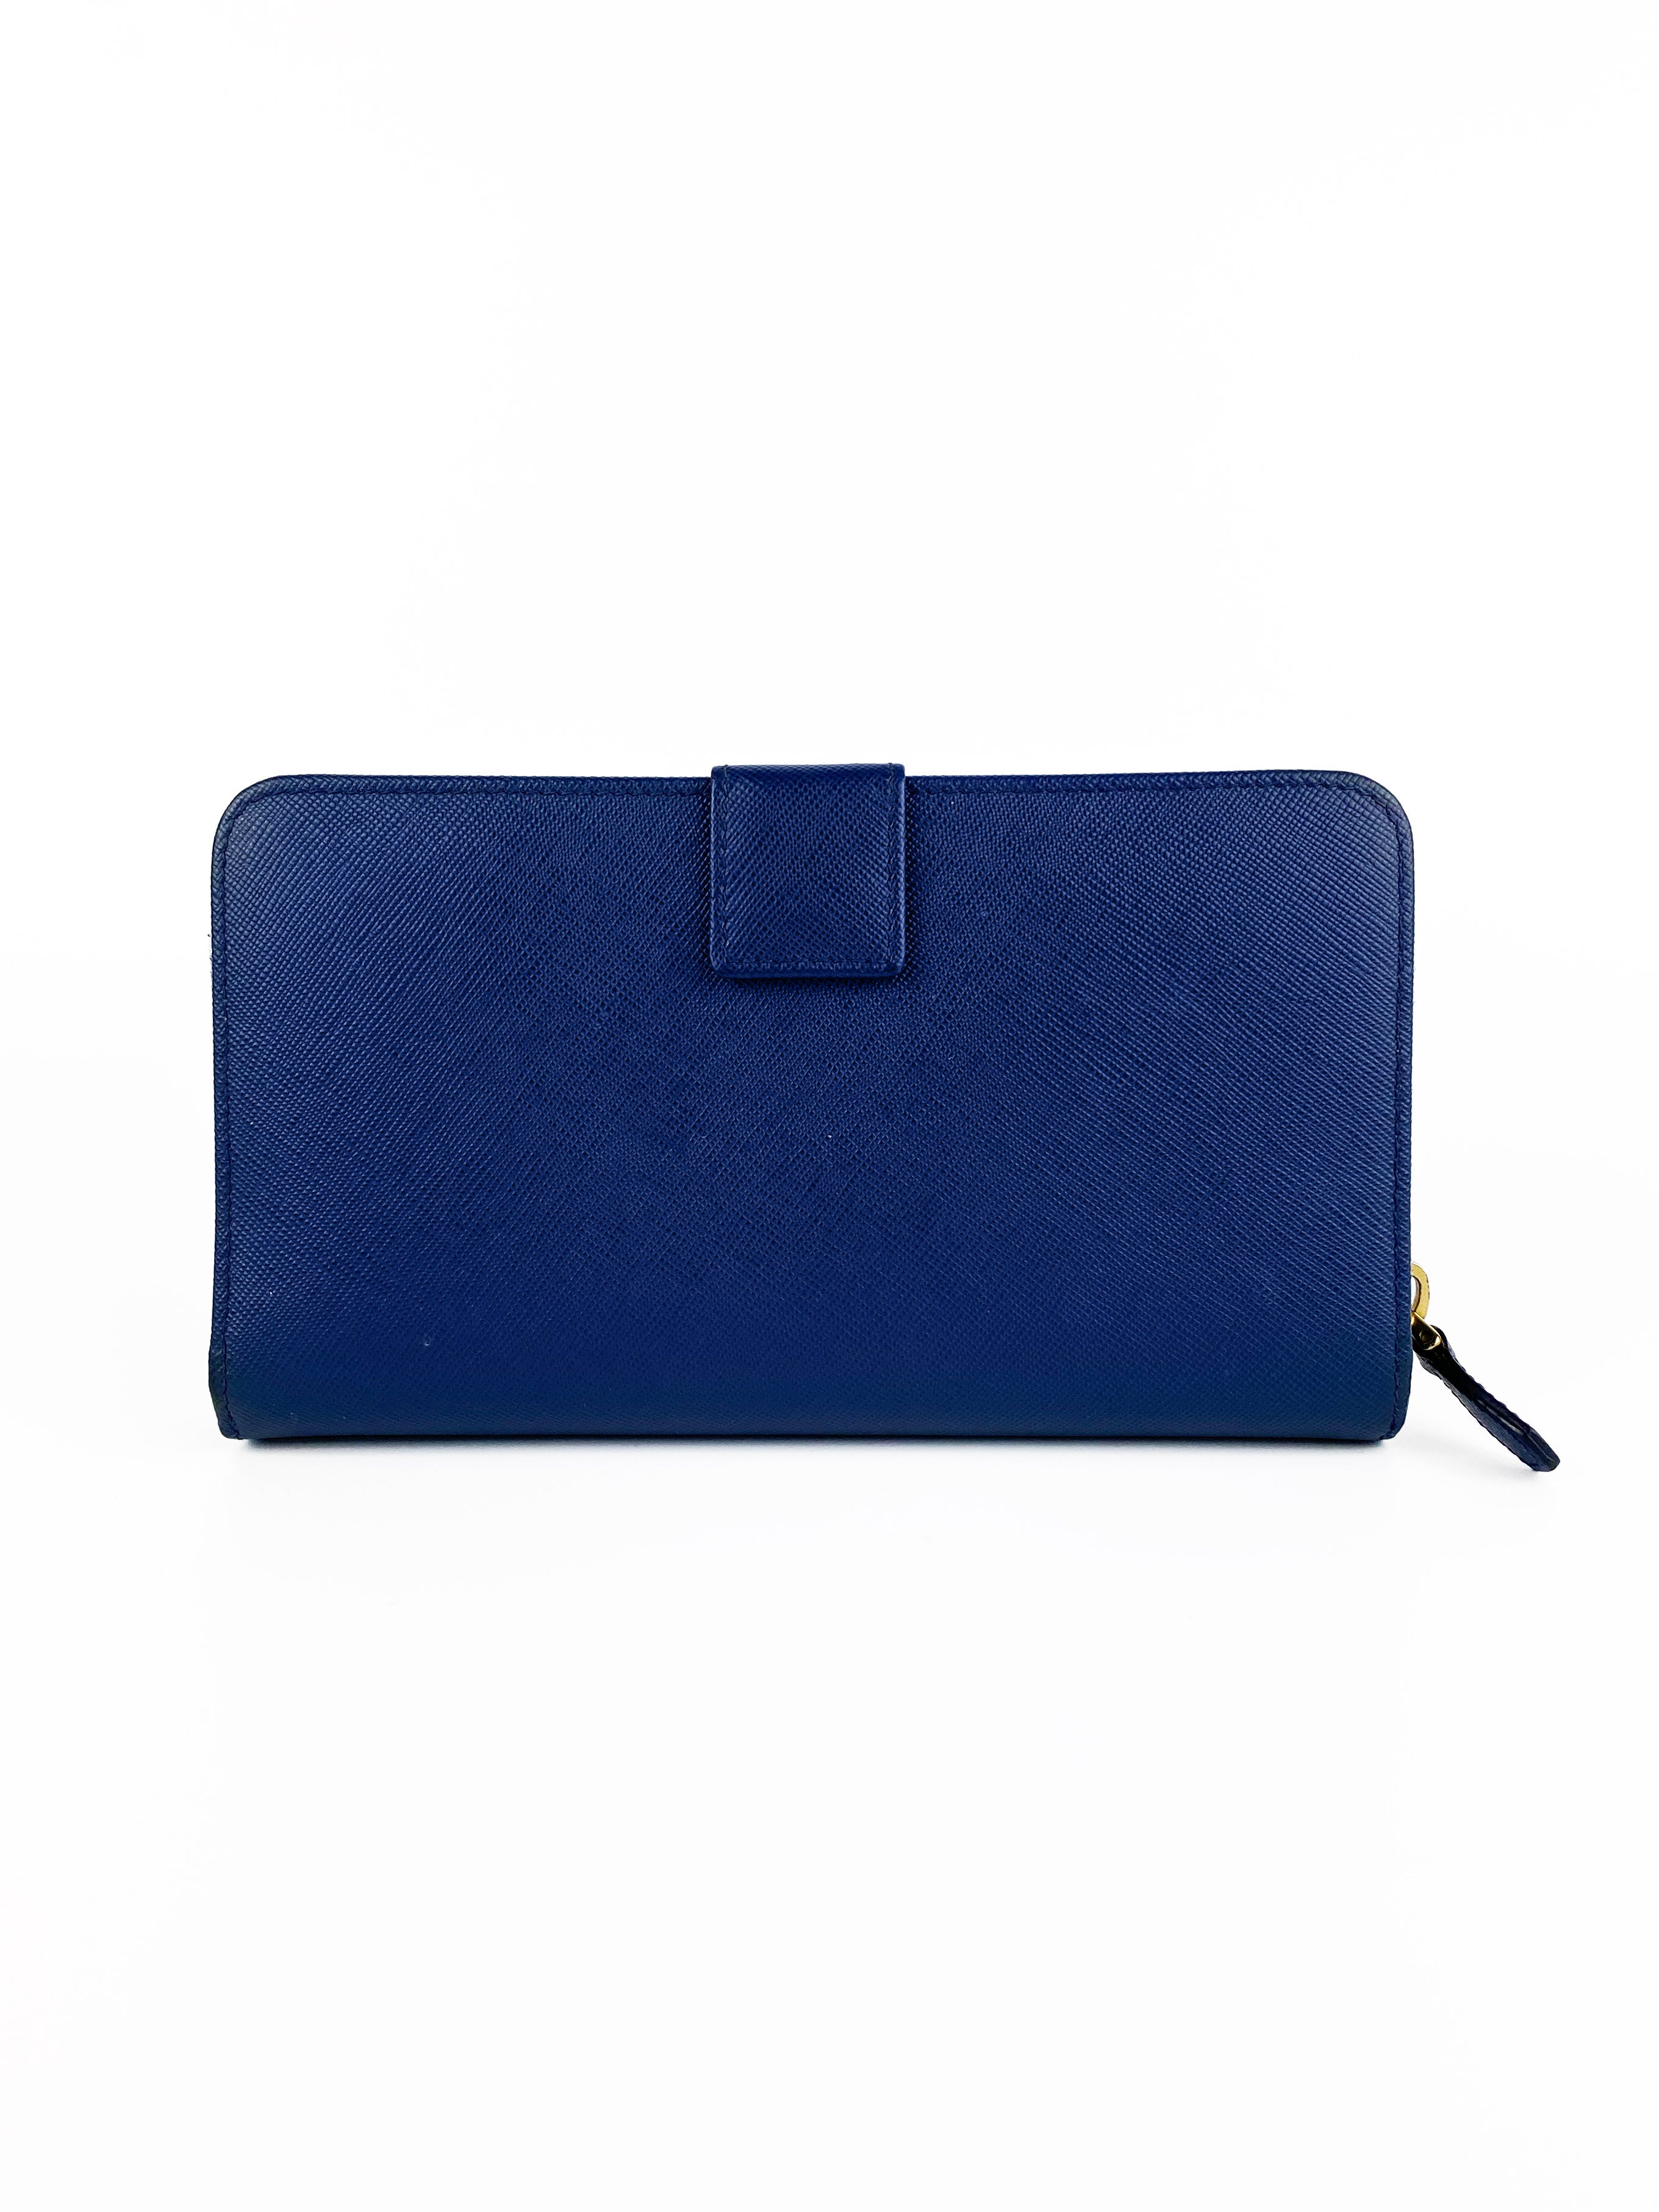 prada-blue-saffiano-wallet-8.jpg